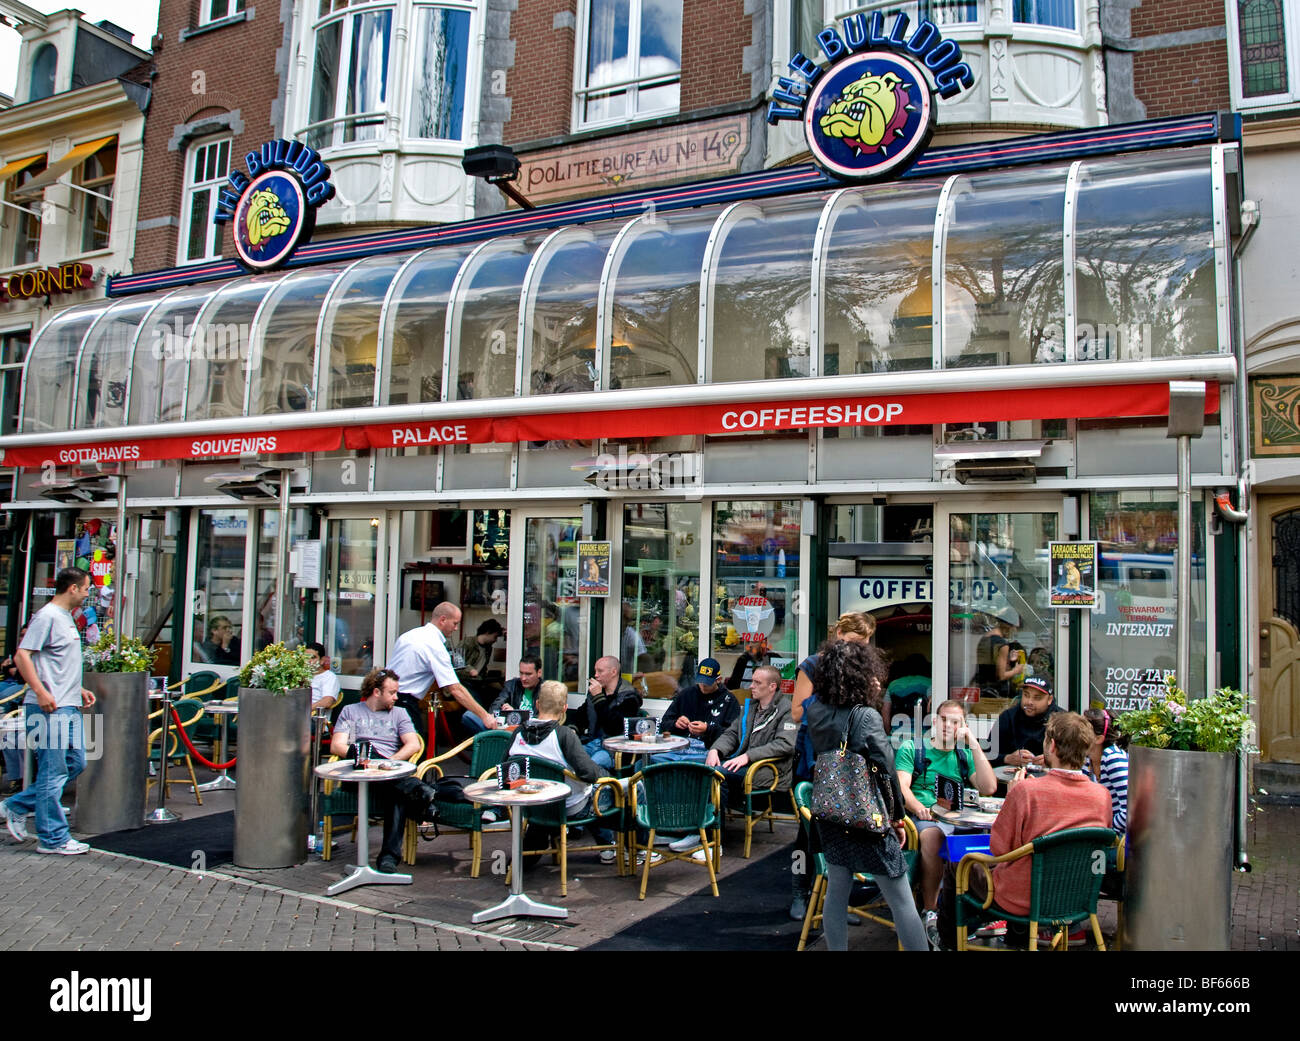 Coffeeshop The Bulldog. Amsterdam